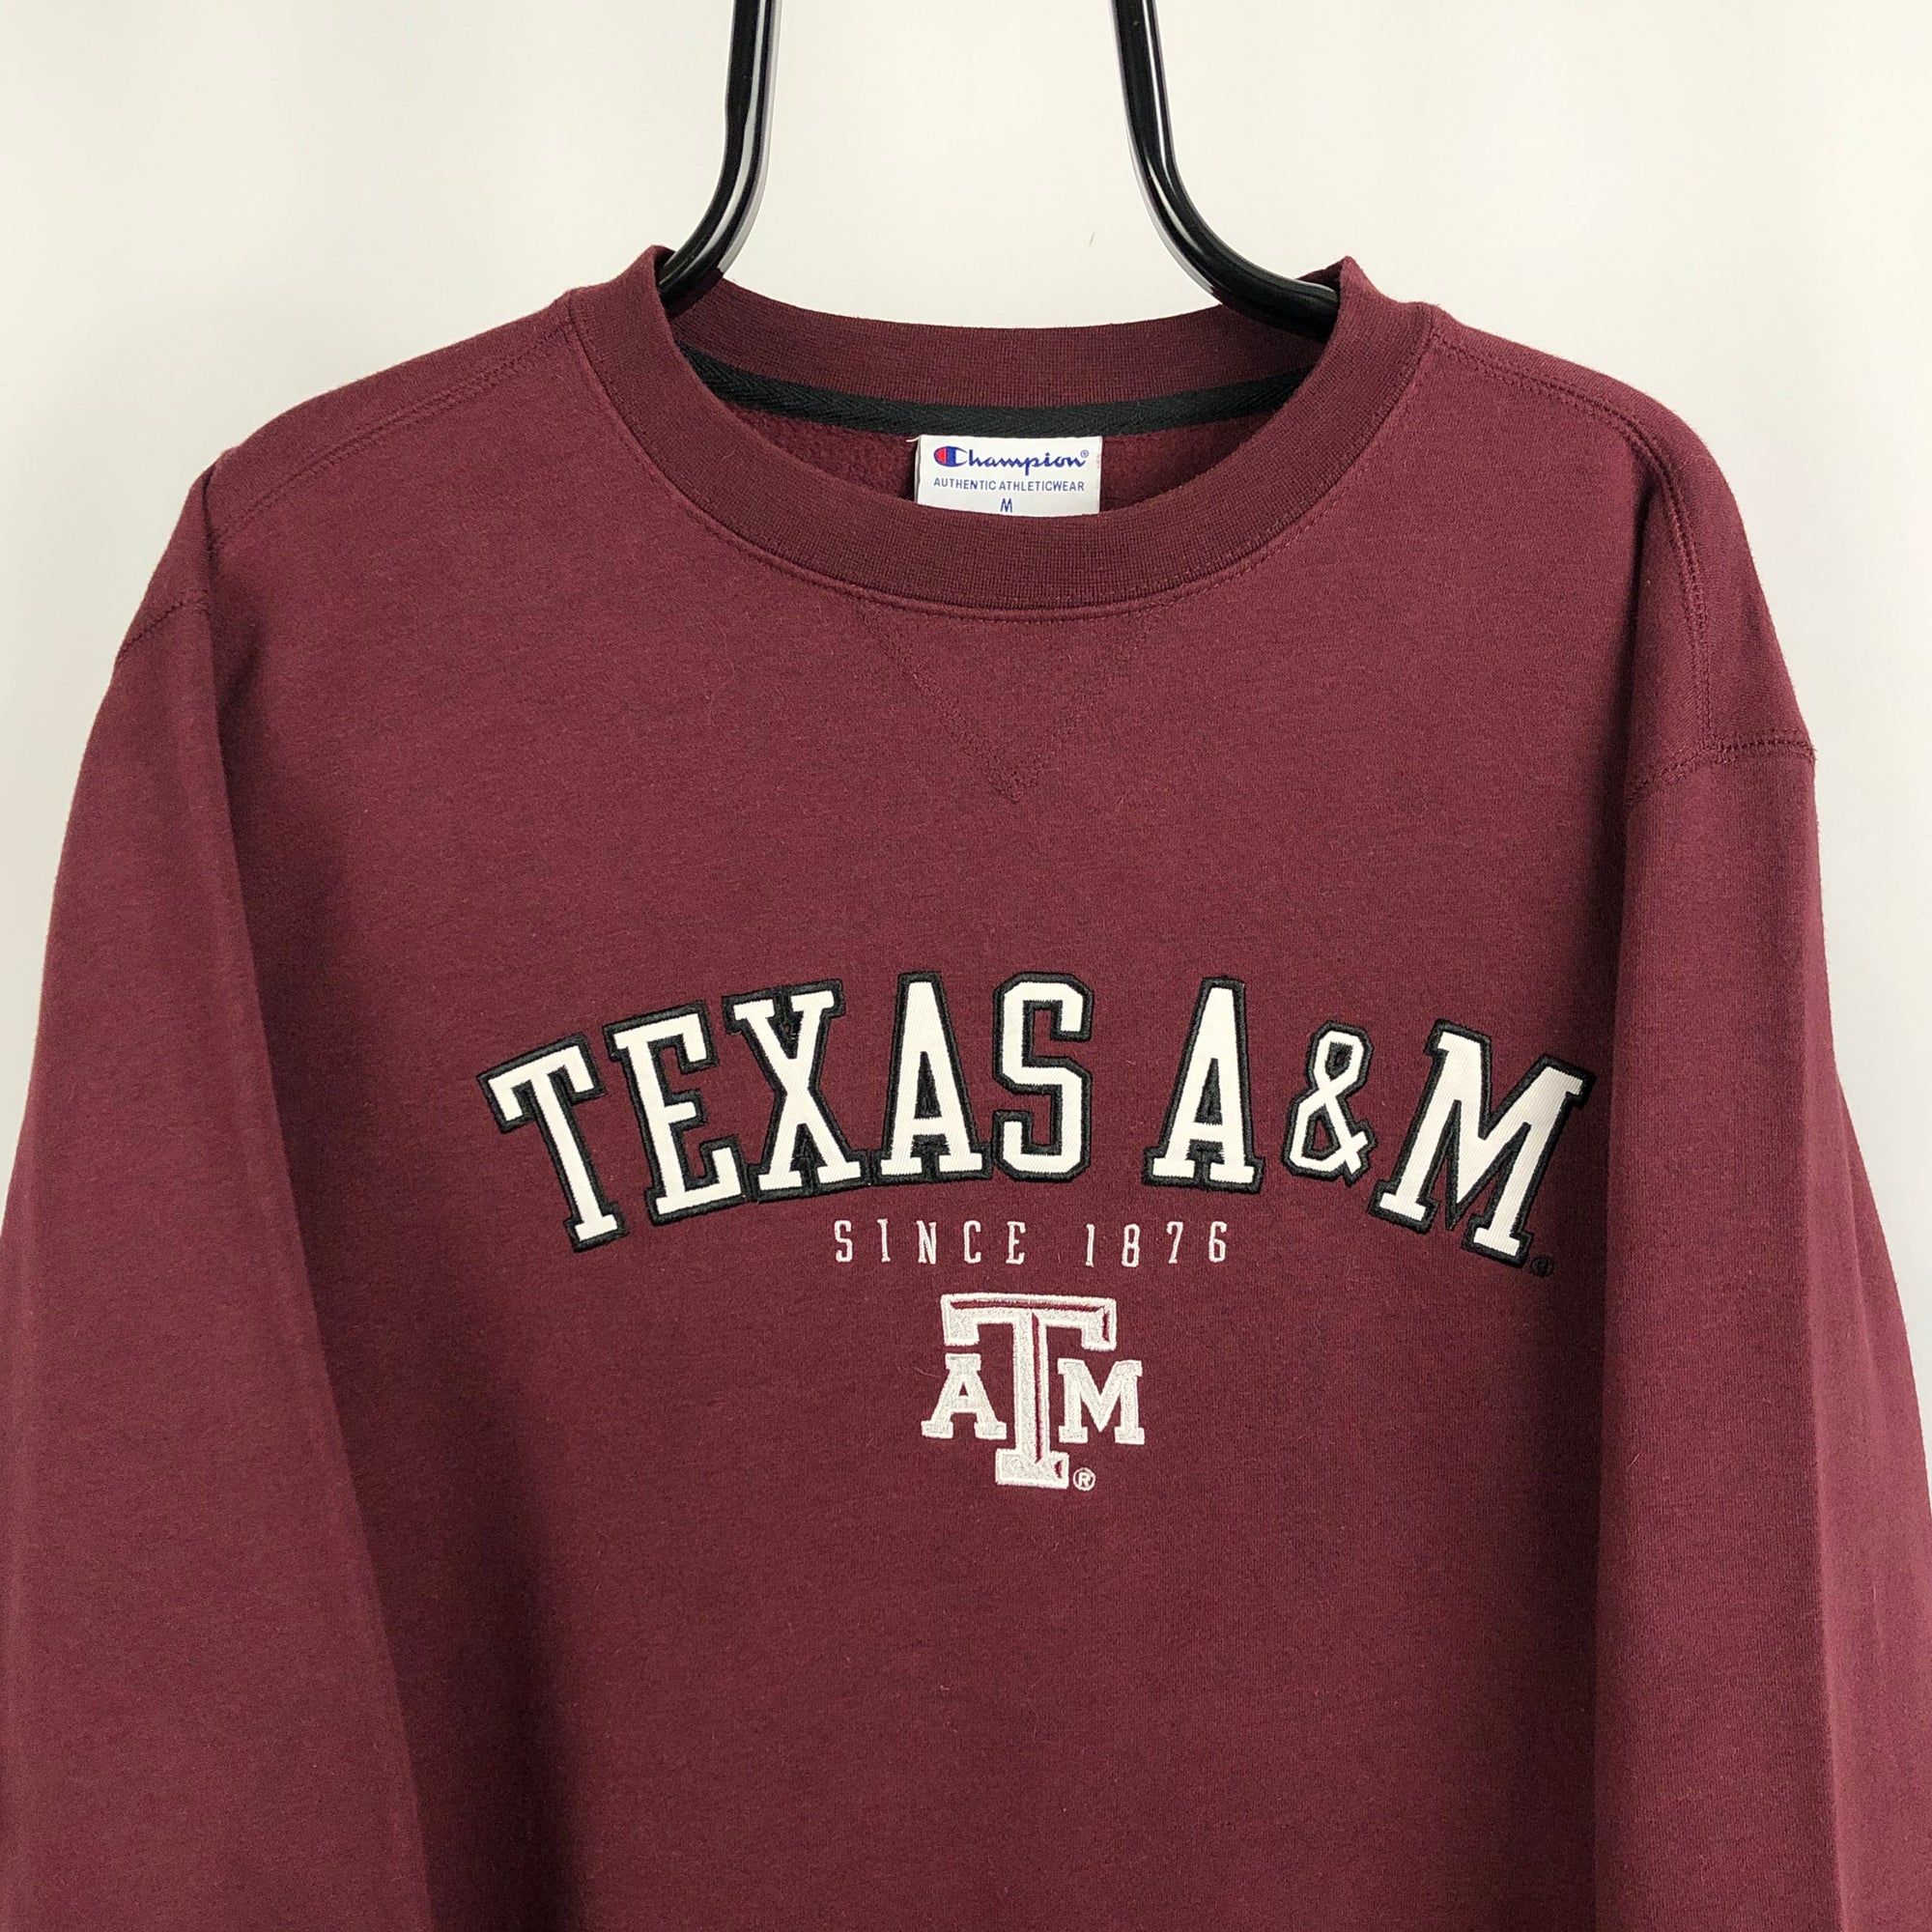 Champion Texas A&M Sweatshirt in Burgundy - Men's Medium/Women's Large